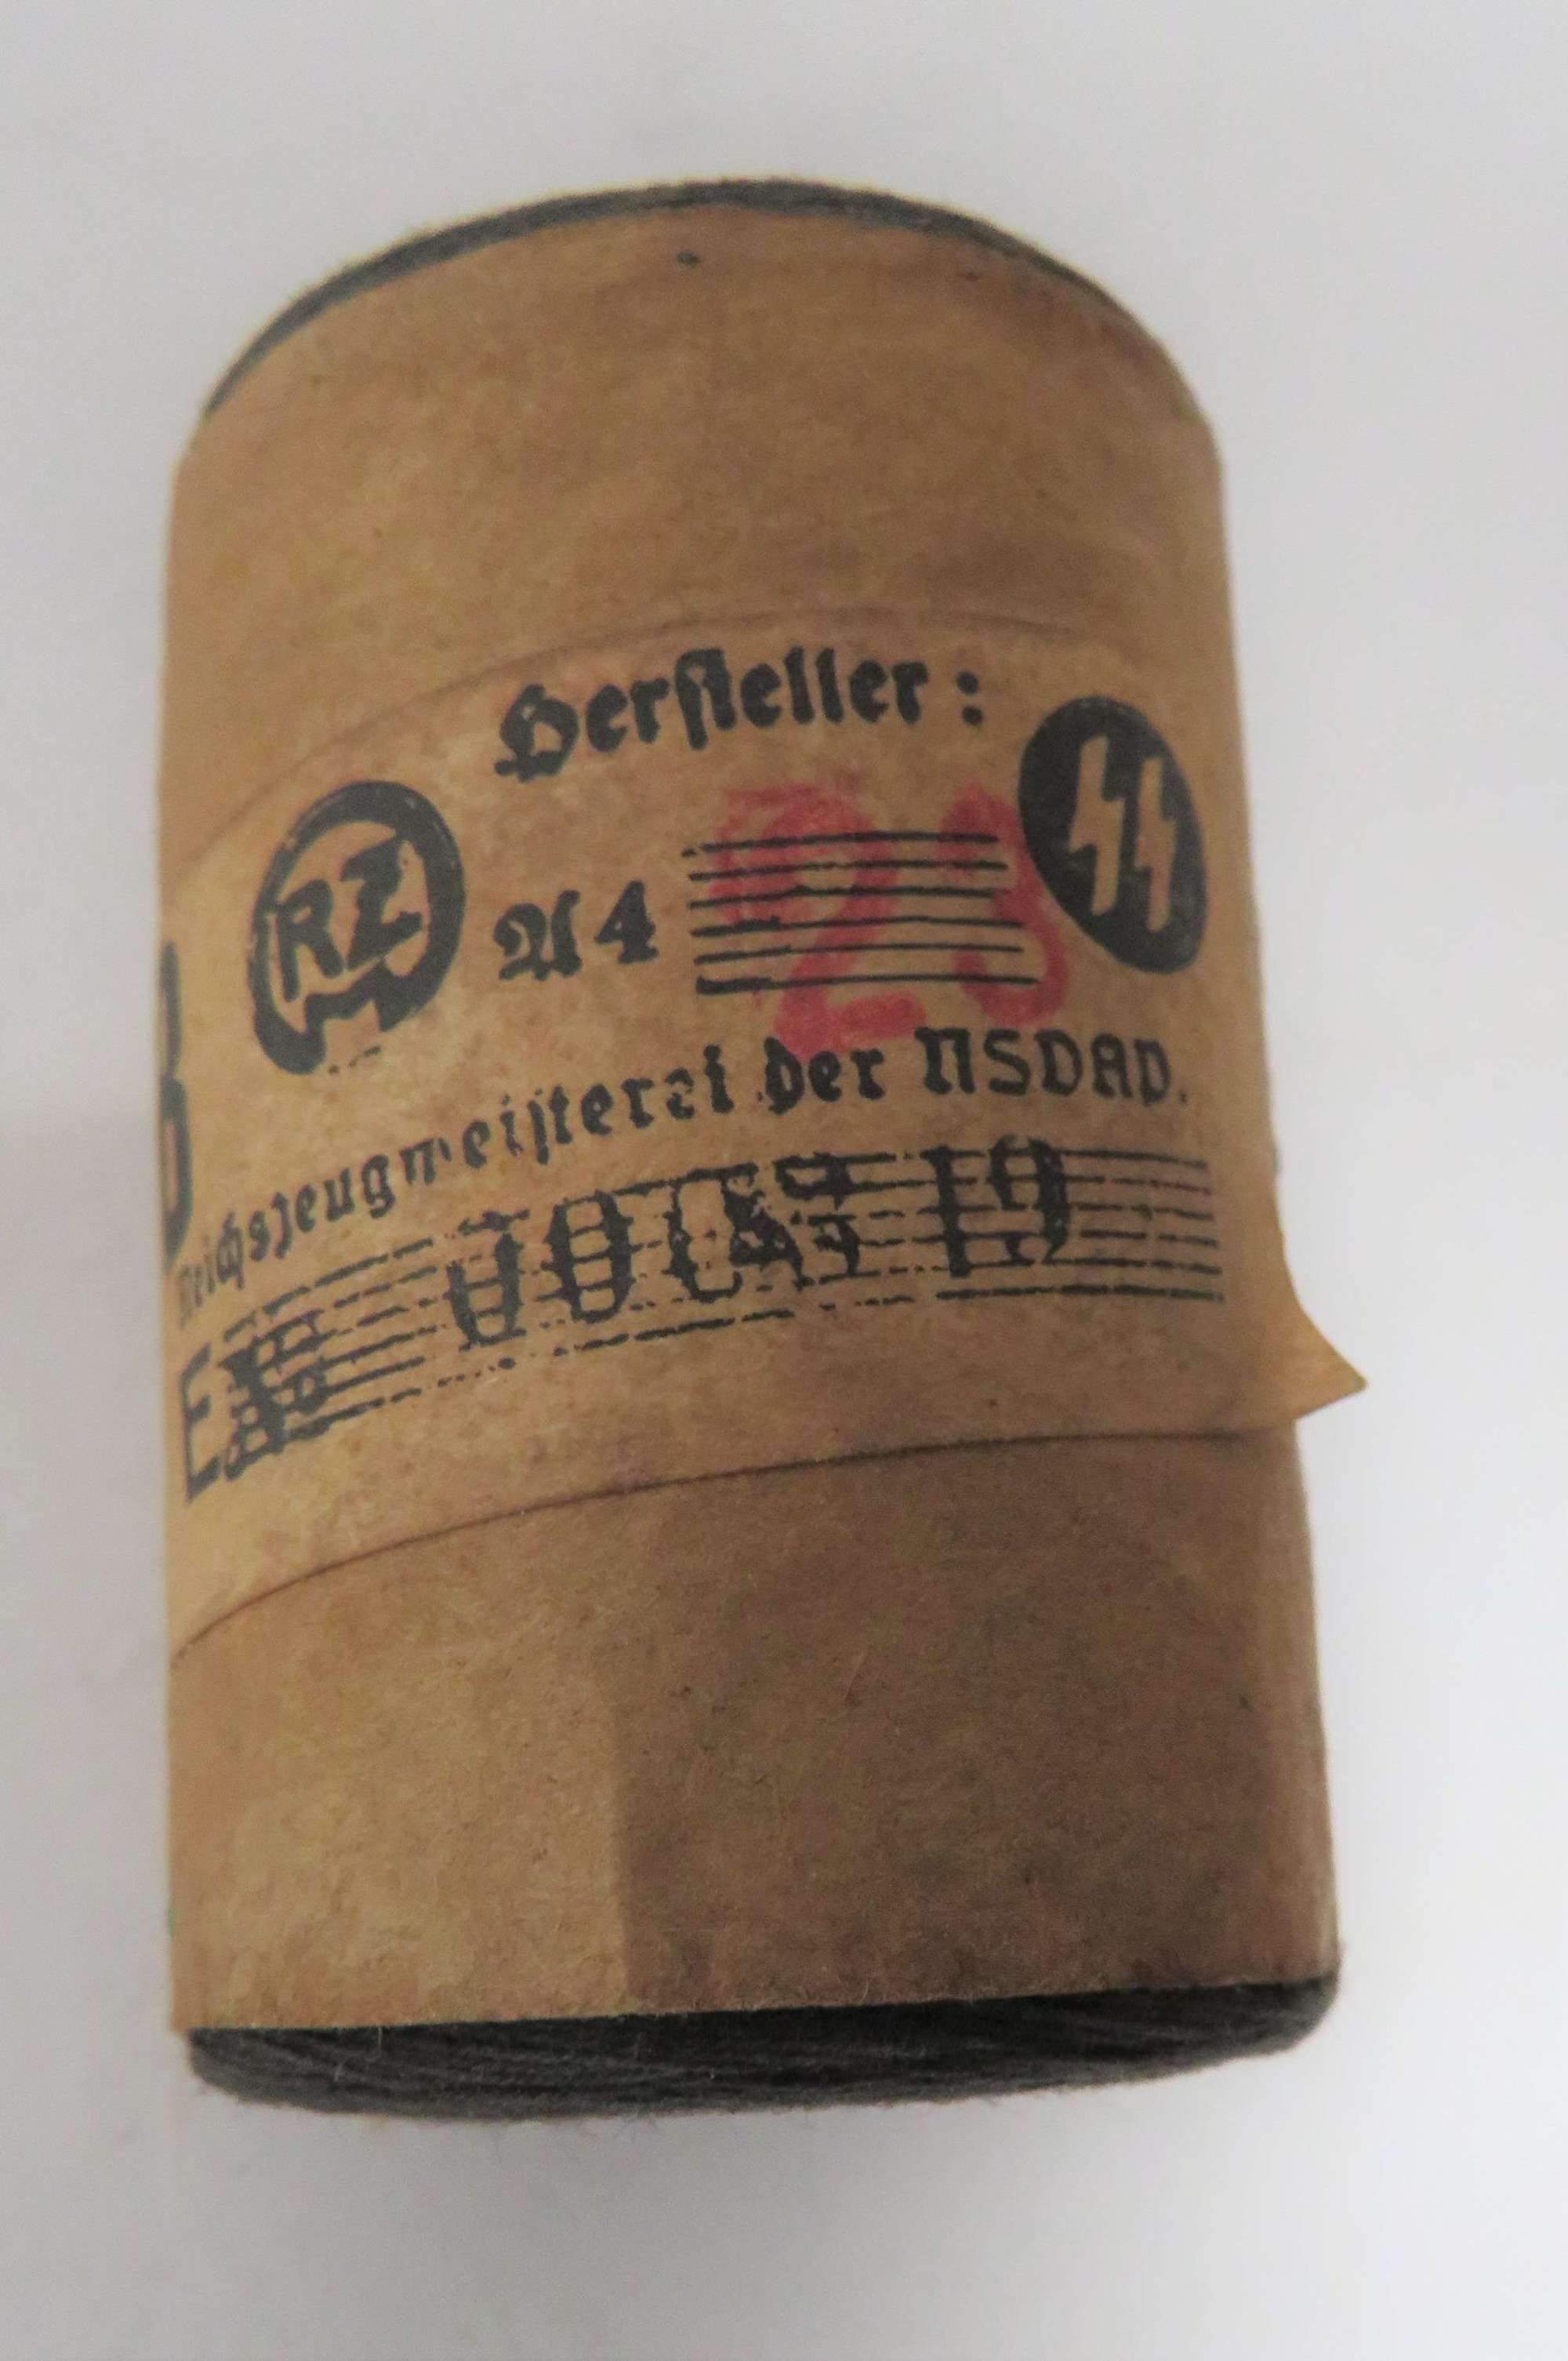 WW2 German Issue Cotton Reel